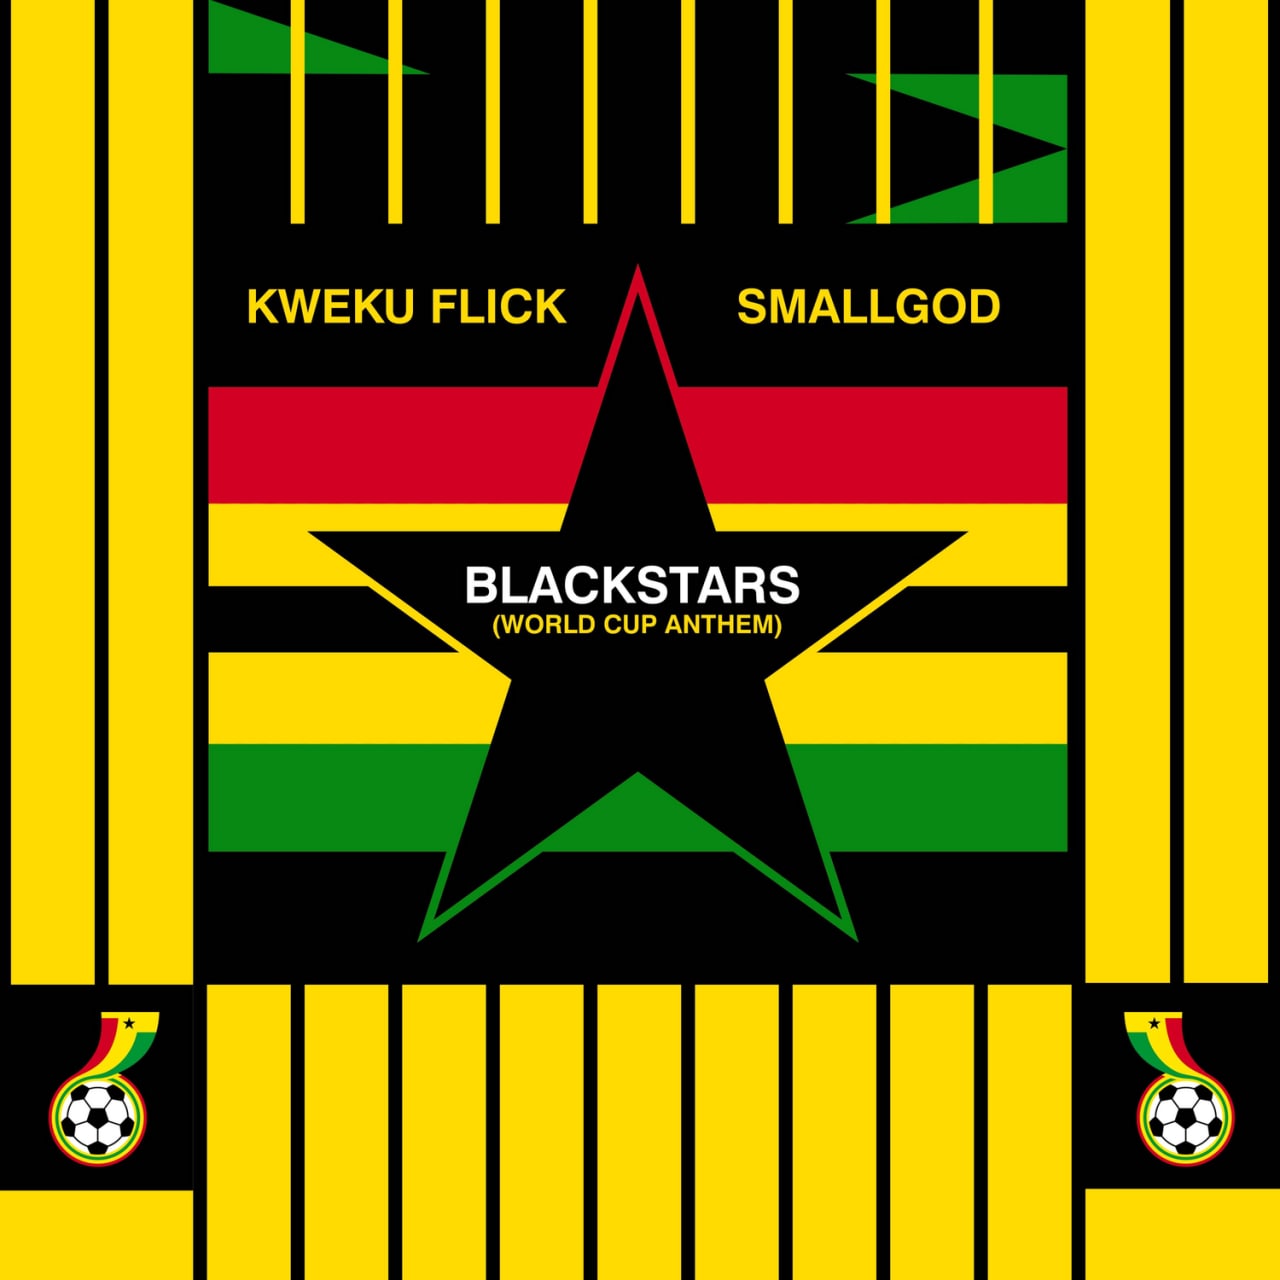 Blackstars (World Cup Anthem) - Kweku Flick feat. Smallgod